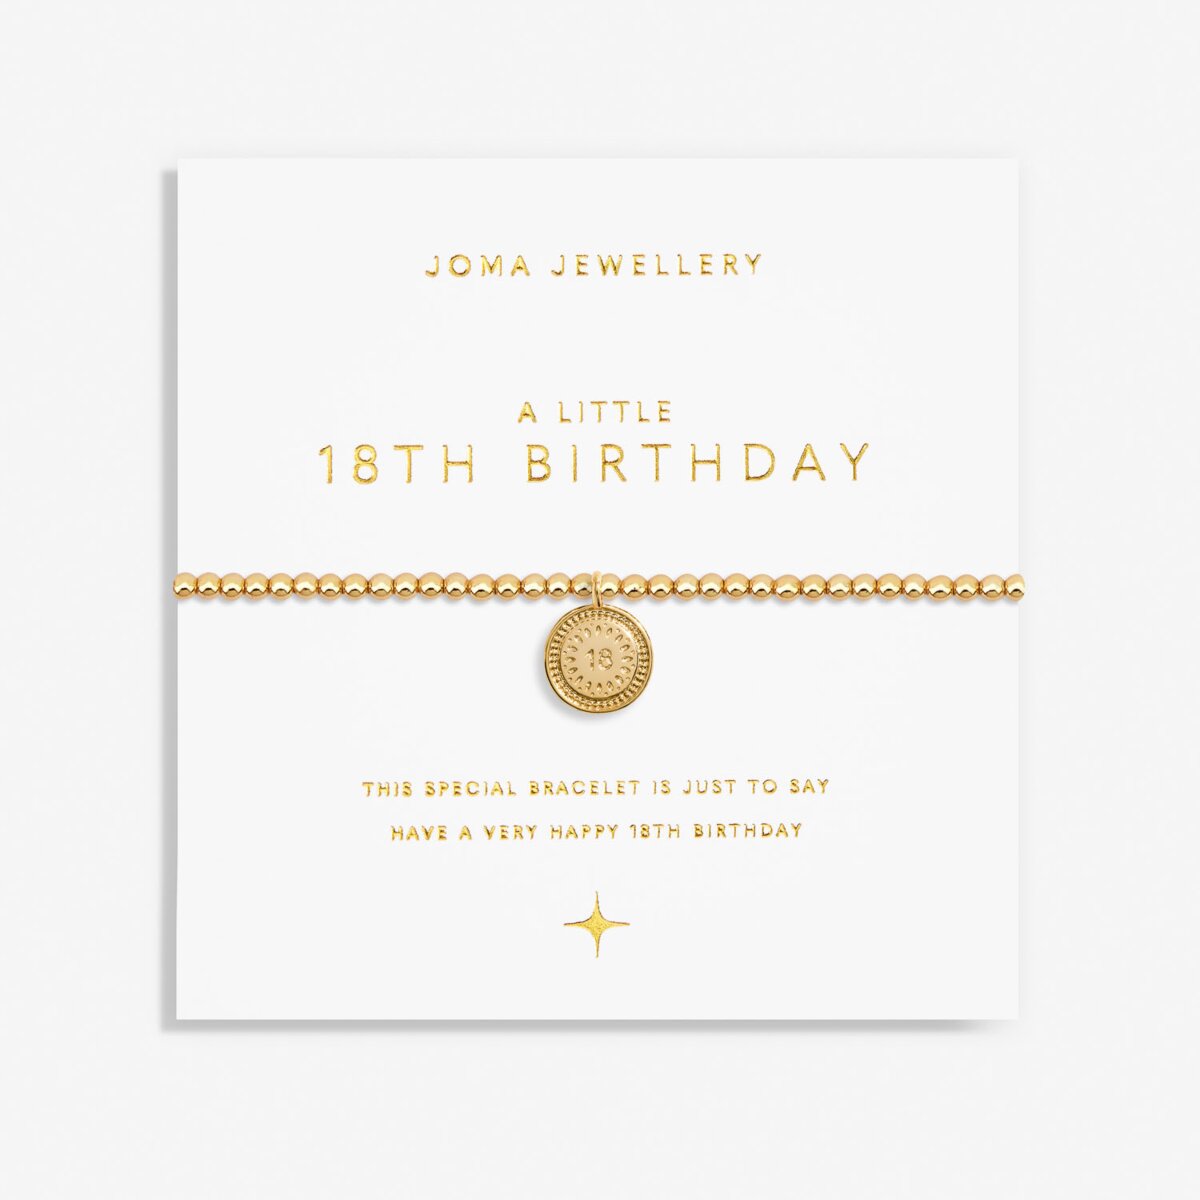 JOMA JEWELLERY | A LITTLE GOLD | 18TH BIRTHDAY BRACELET